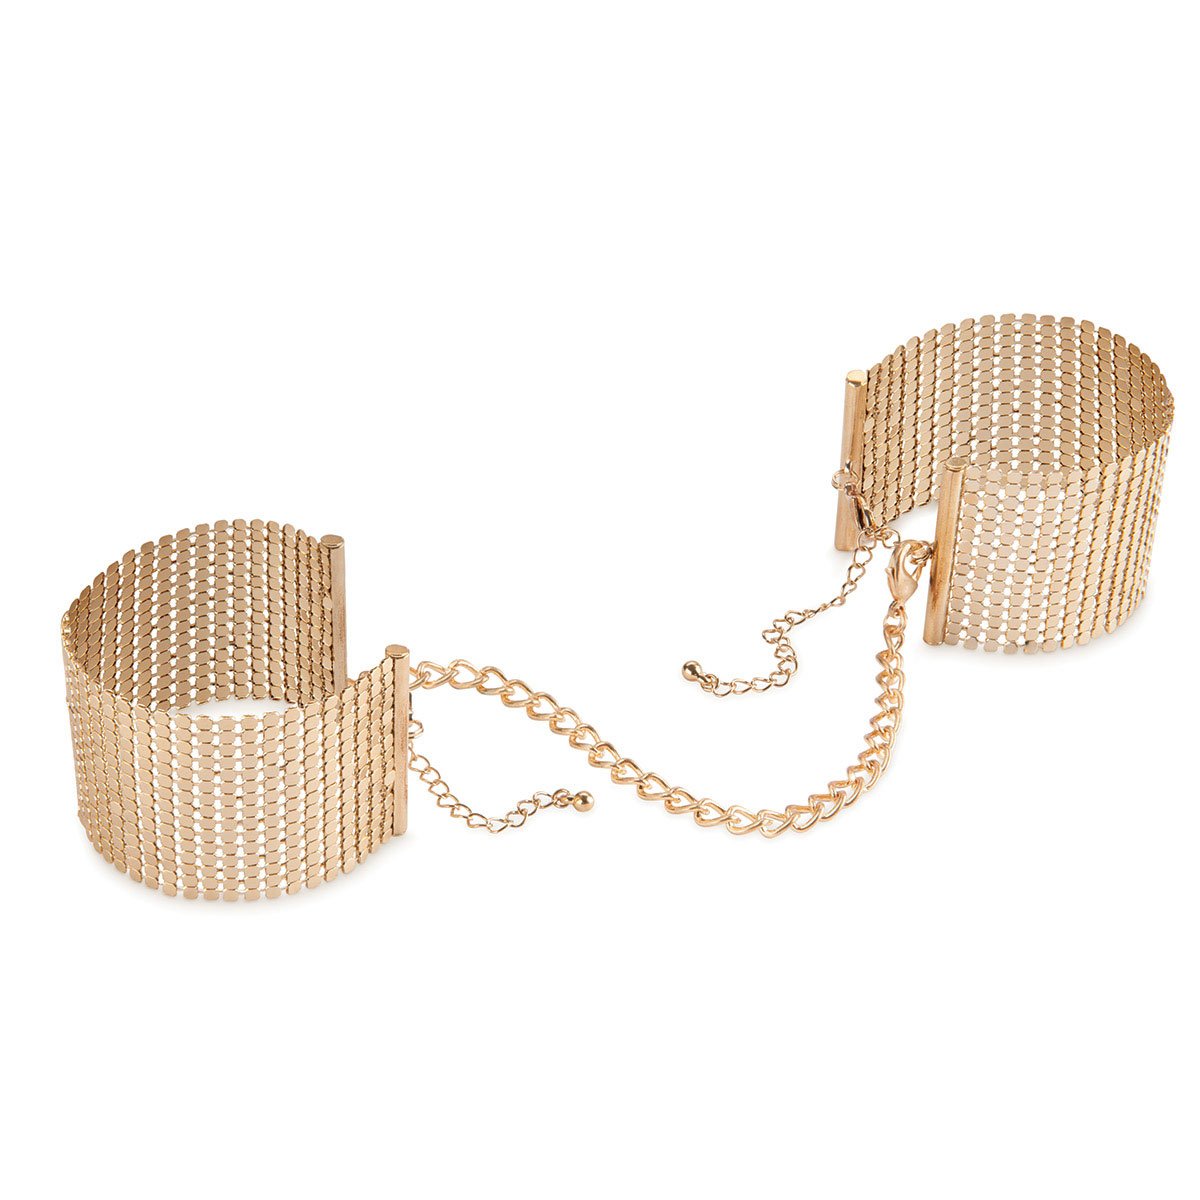 Bijoux Indiscrets Desir Metallique Chain Handcuffs - Buy At Luxury Toy X - Free 3-Day Shipping